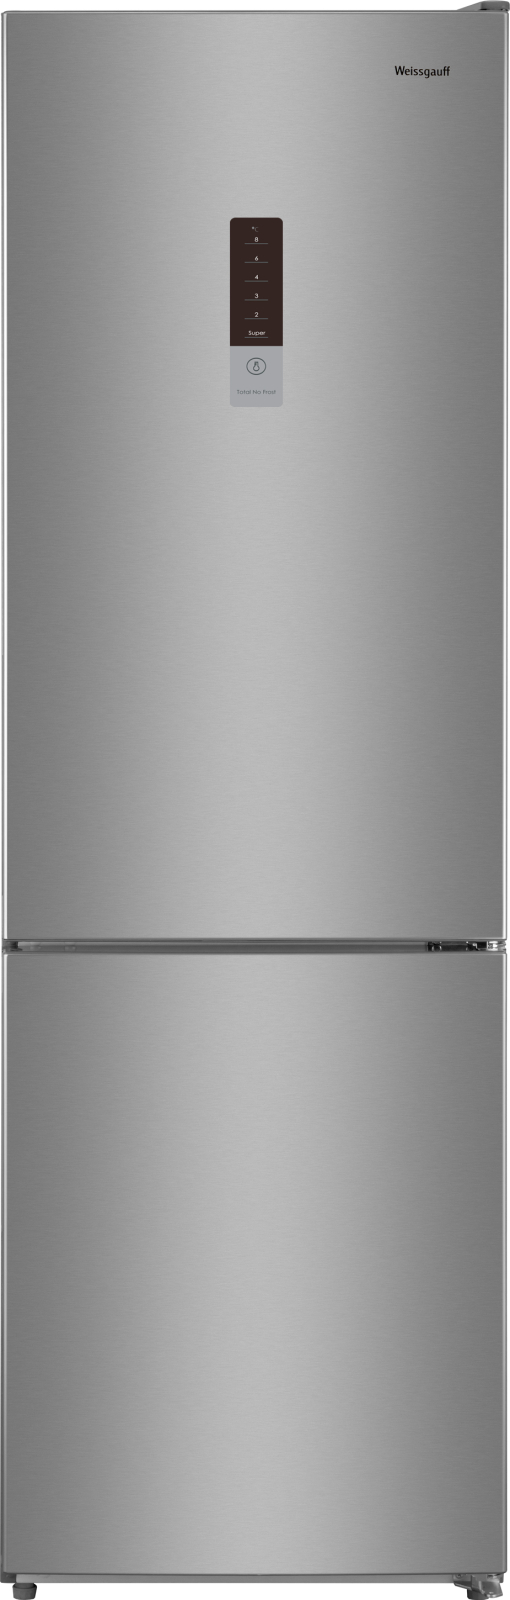 Холодильник Weissgauff WRK 190 DX серебристый холодильник weissgauff wsbs 695 nfx серебристый